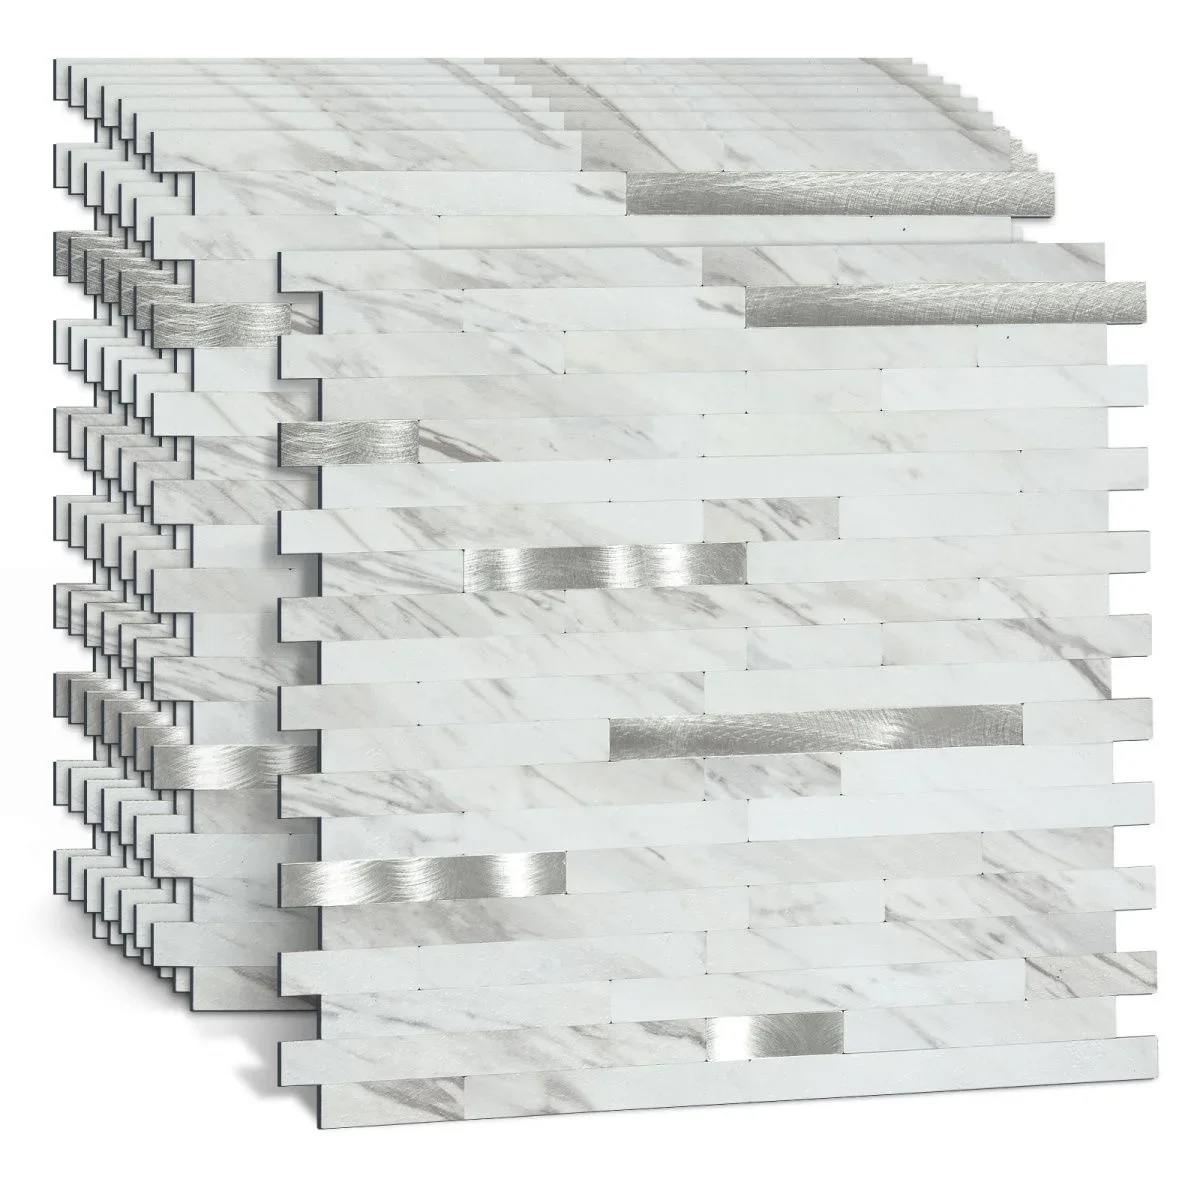 

11pcs/lot Mosaic Wall Tile Peel And Stick Self Adhesive Waterproof Aluminum composite rectangle Kitchen Bath Tile Backsplash